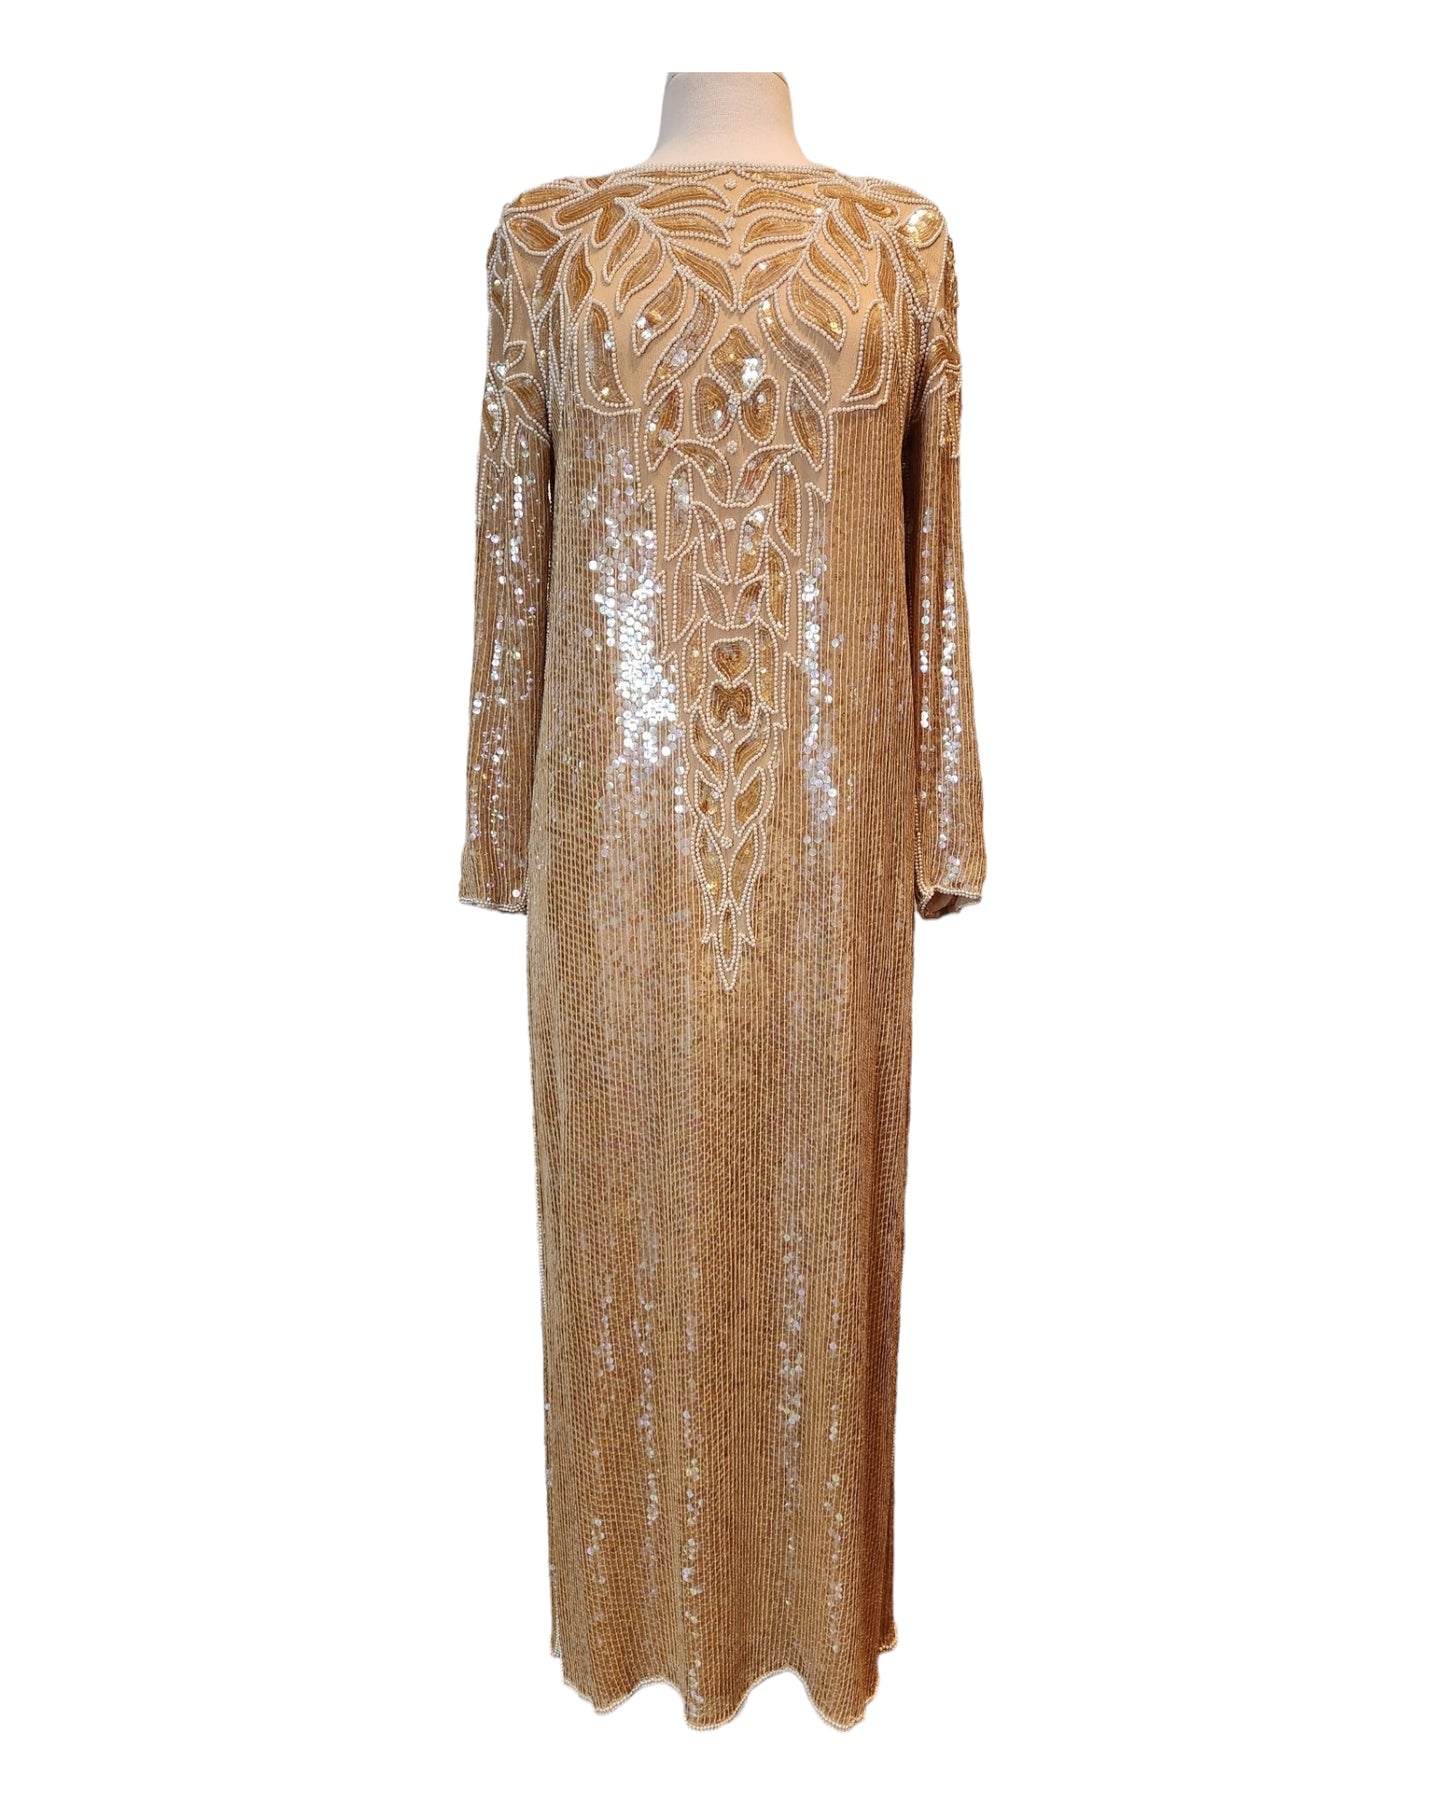 Vintage Nude/Gold Toned "Dominique" Sheath Dress